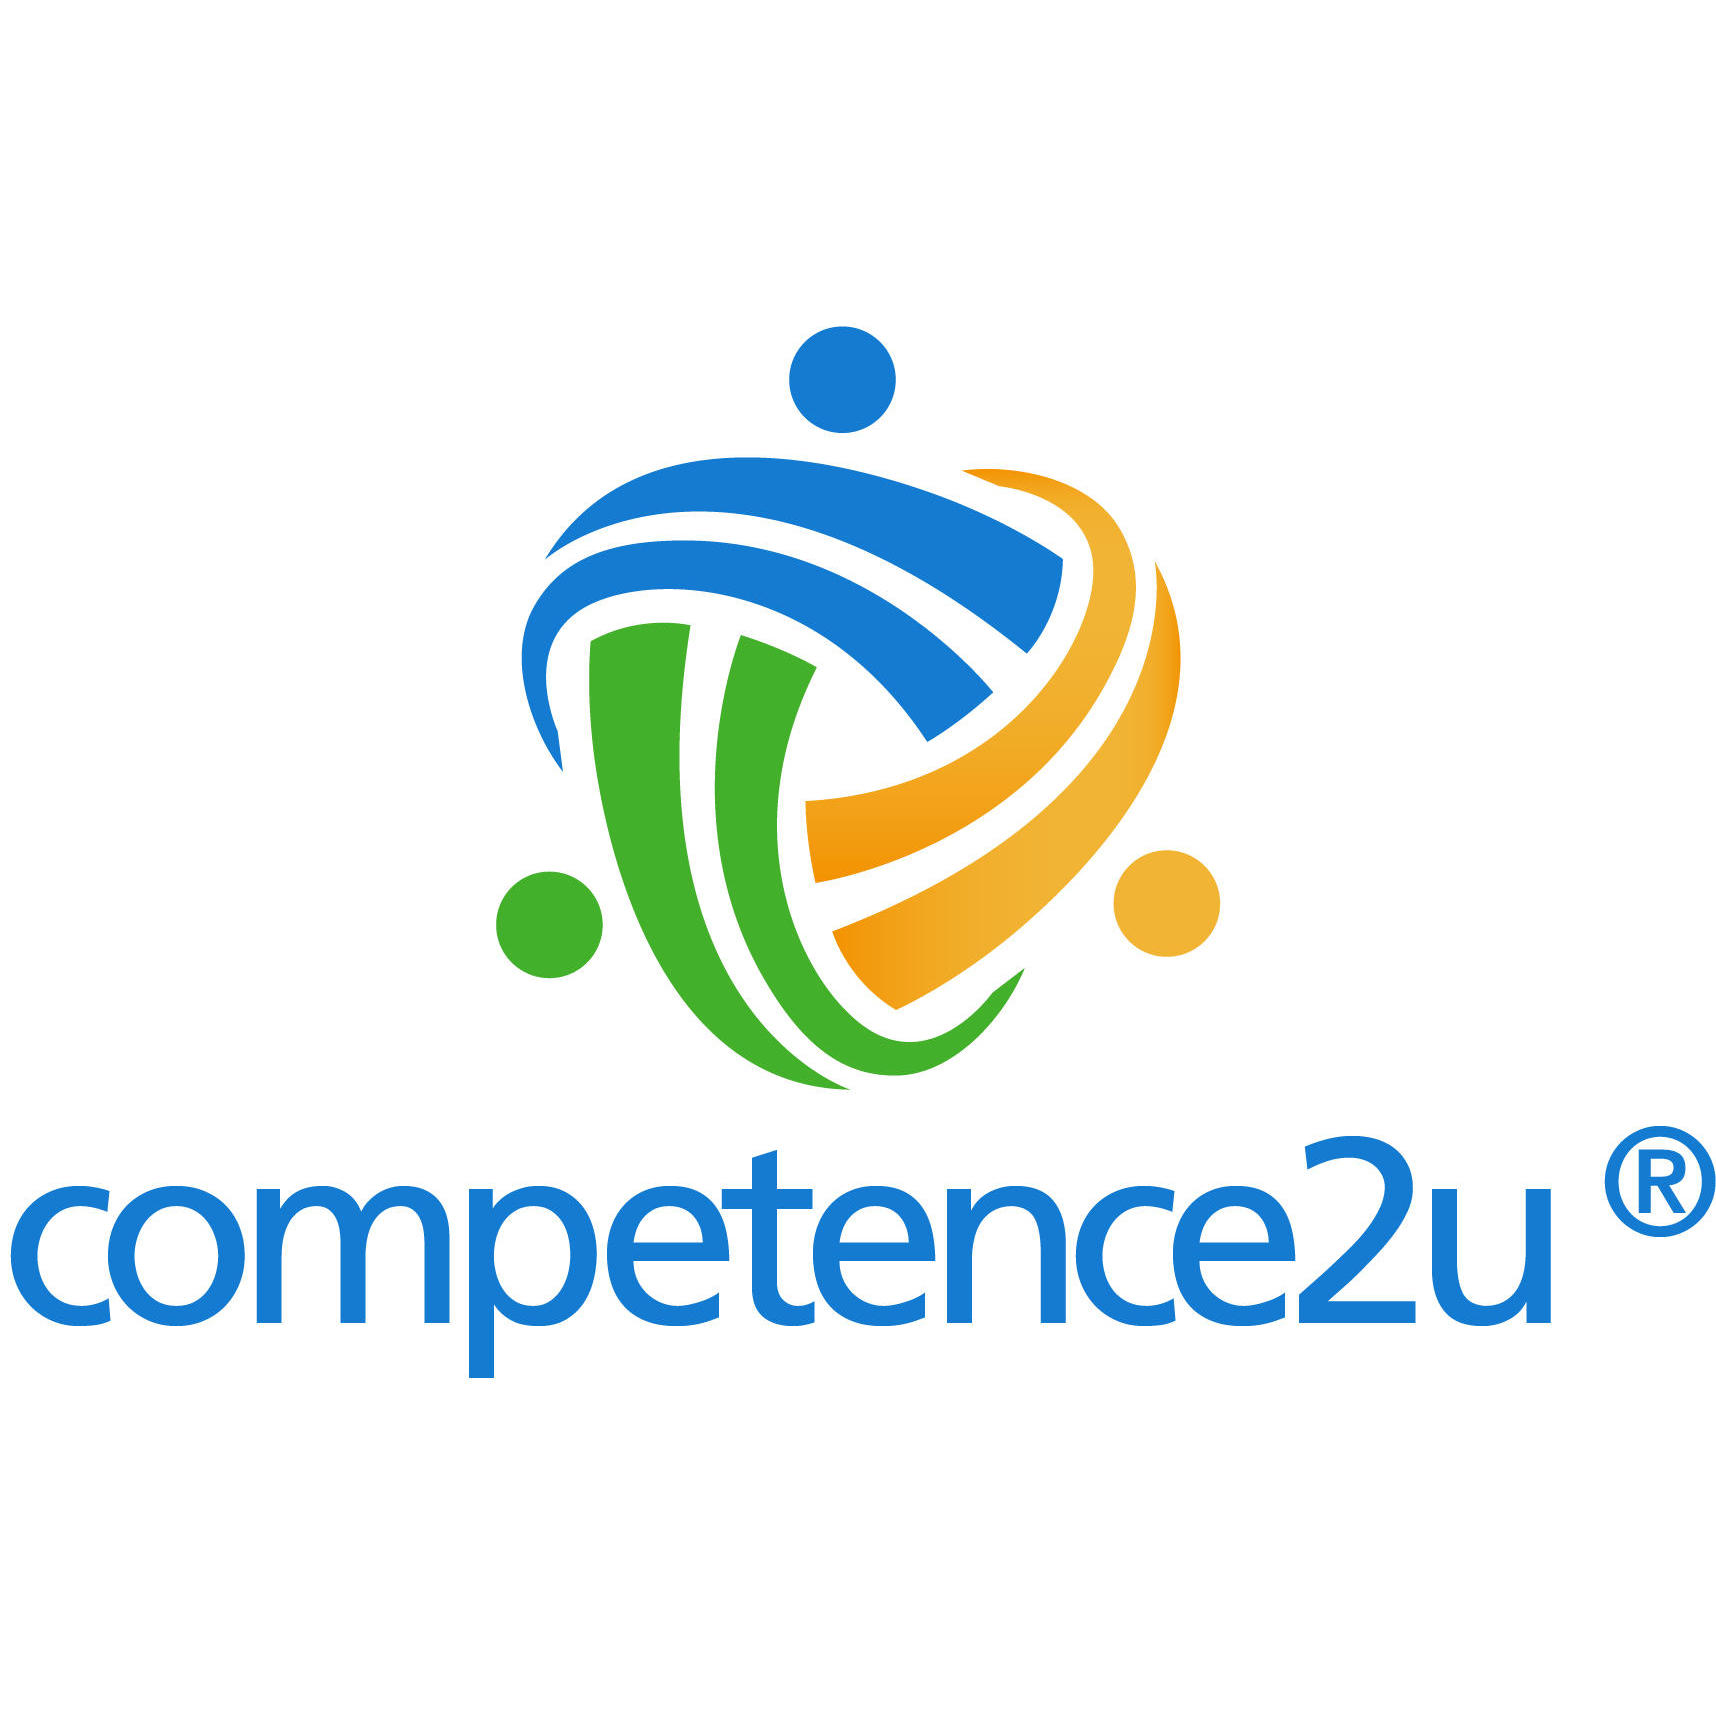 competence2u in Dortmund - Logo